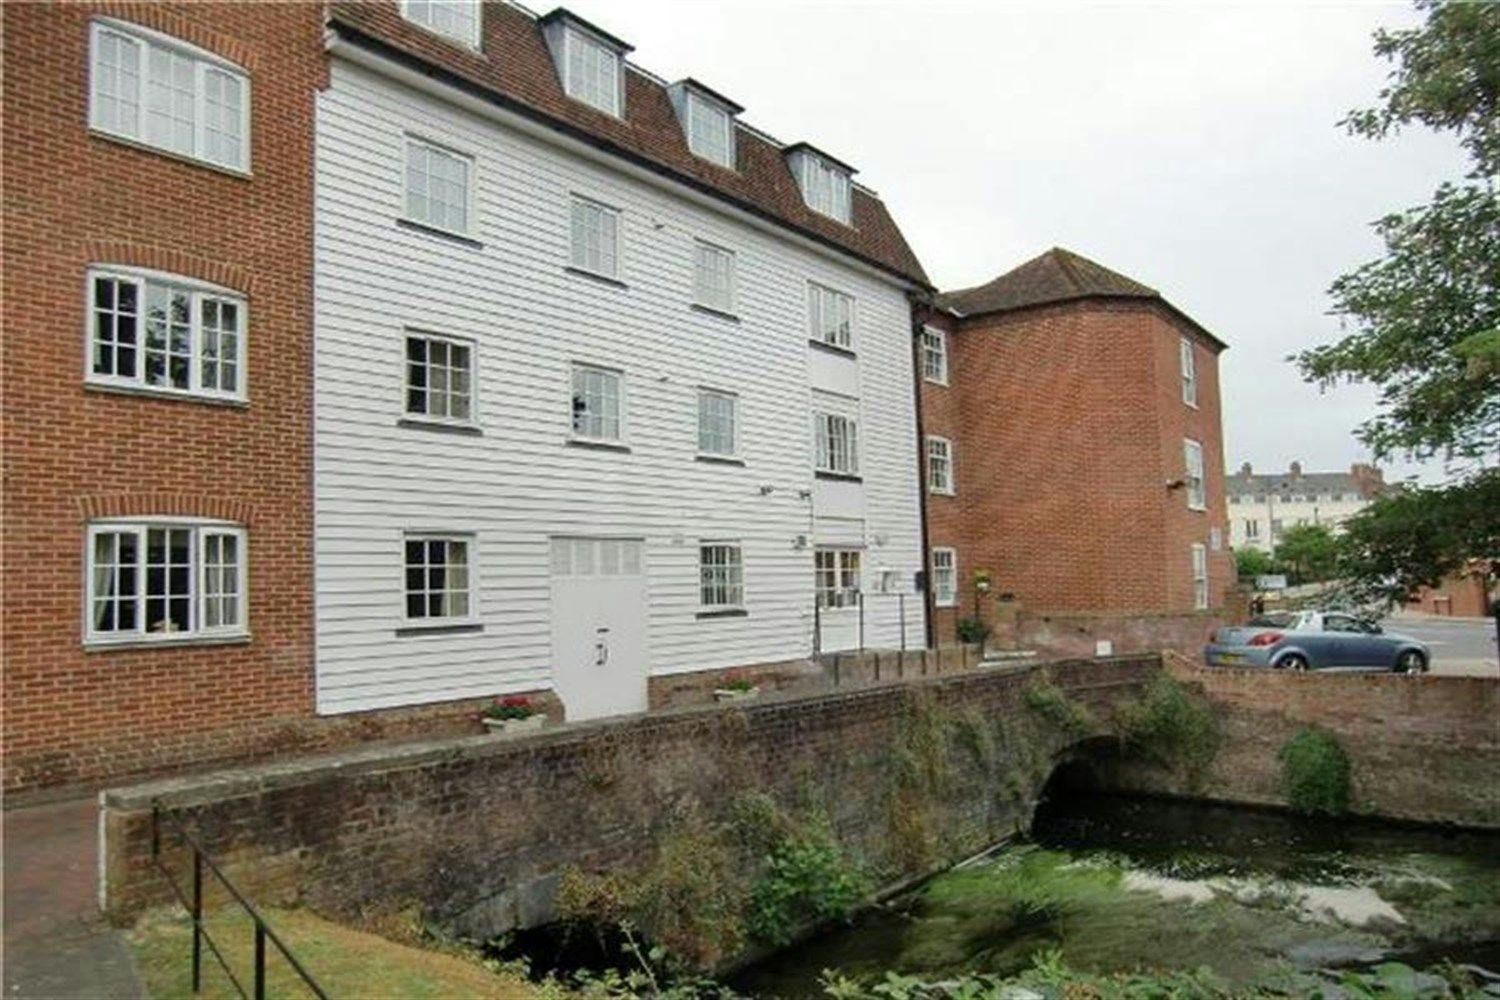 Exterior of Dean Mills Court Retirement Development in Canterbury, Kent 